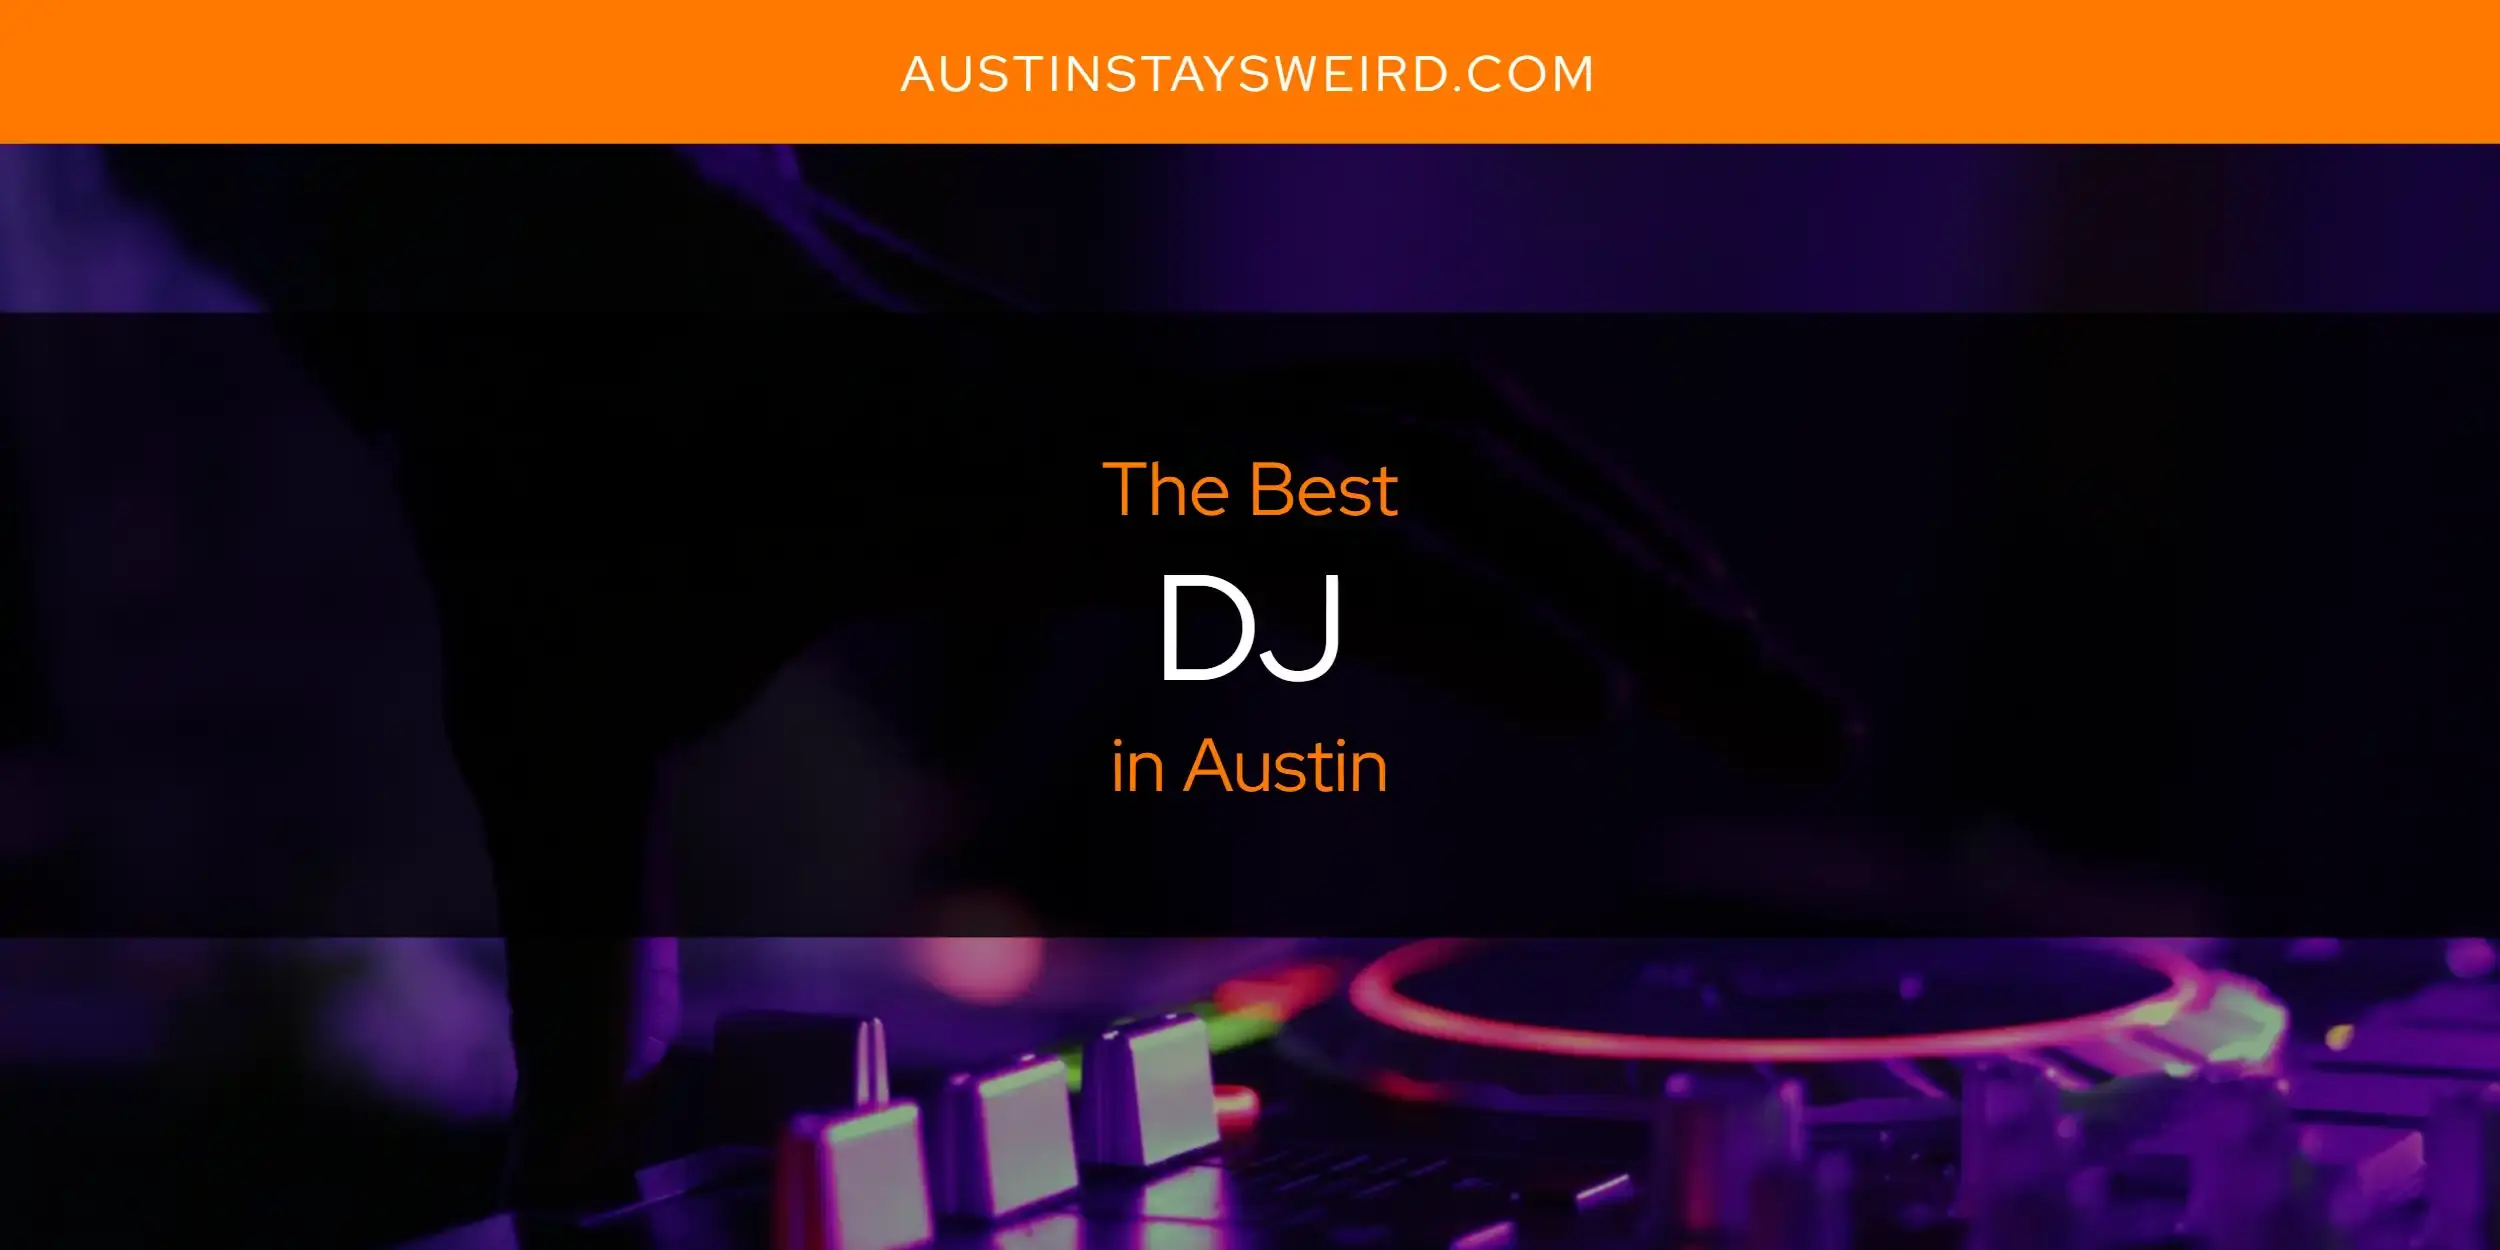 Best DJ in Austin? Here's the Top 8